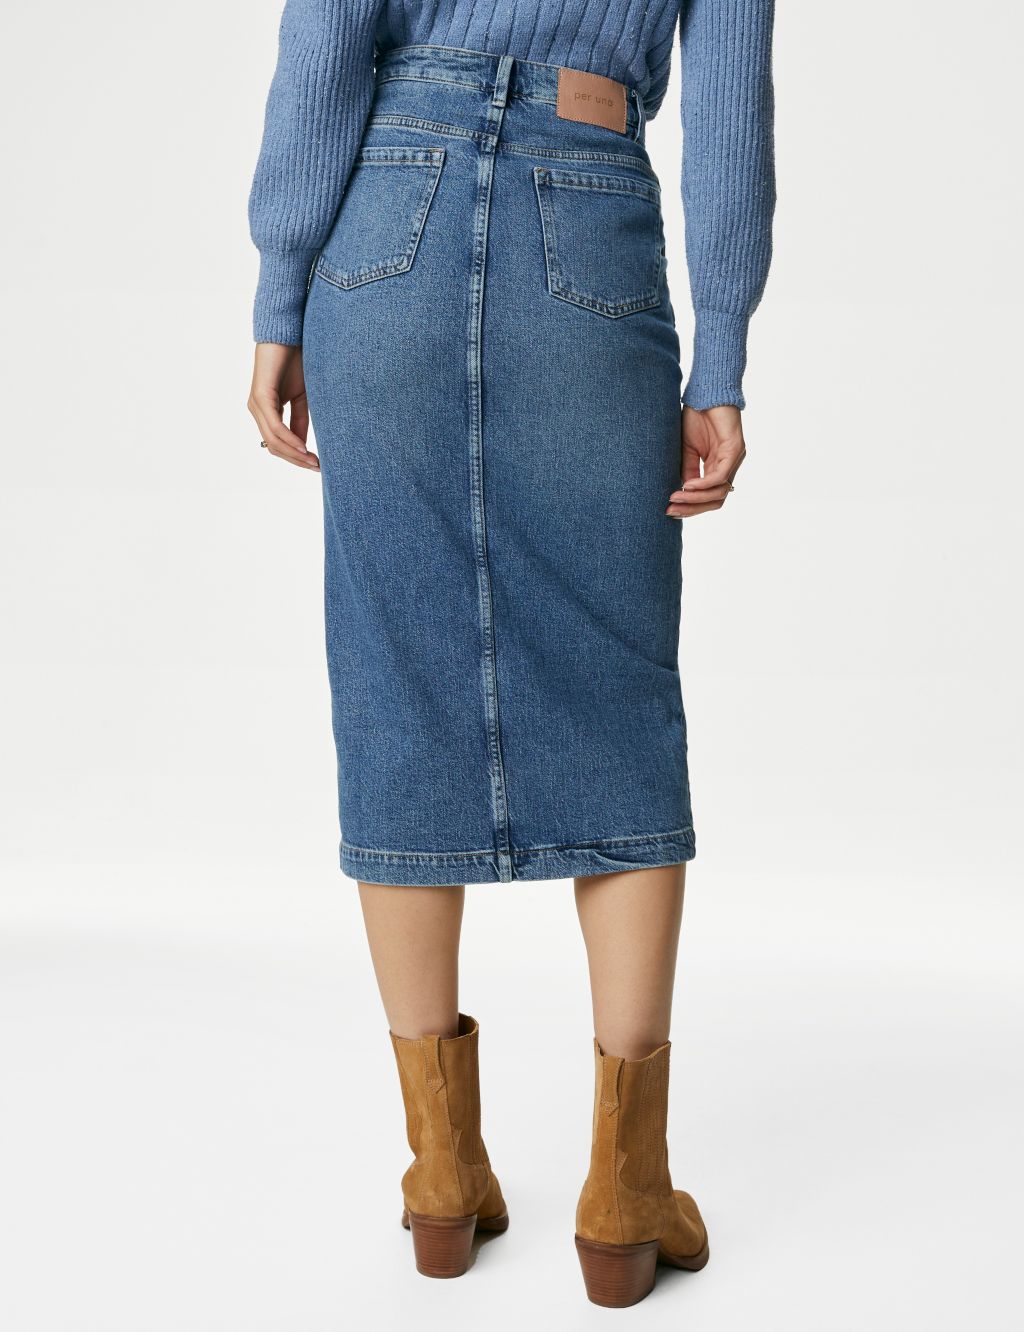 Plus-Size Denim Skirts | M&S